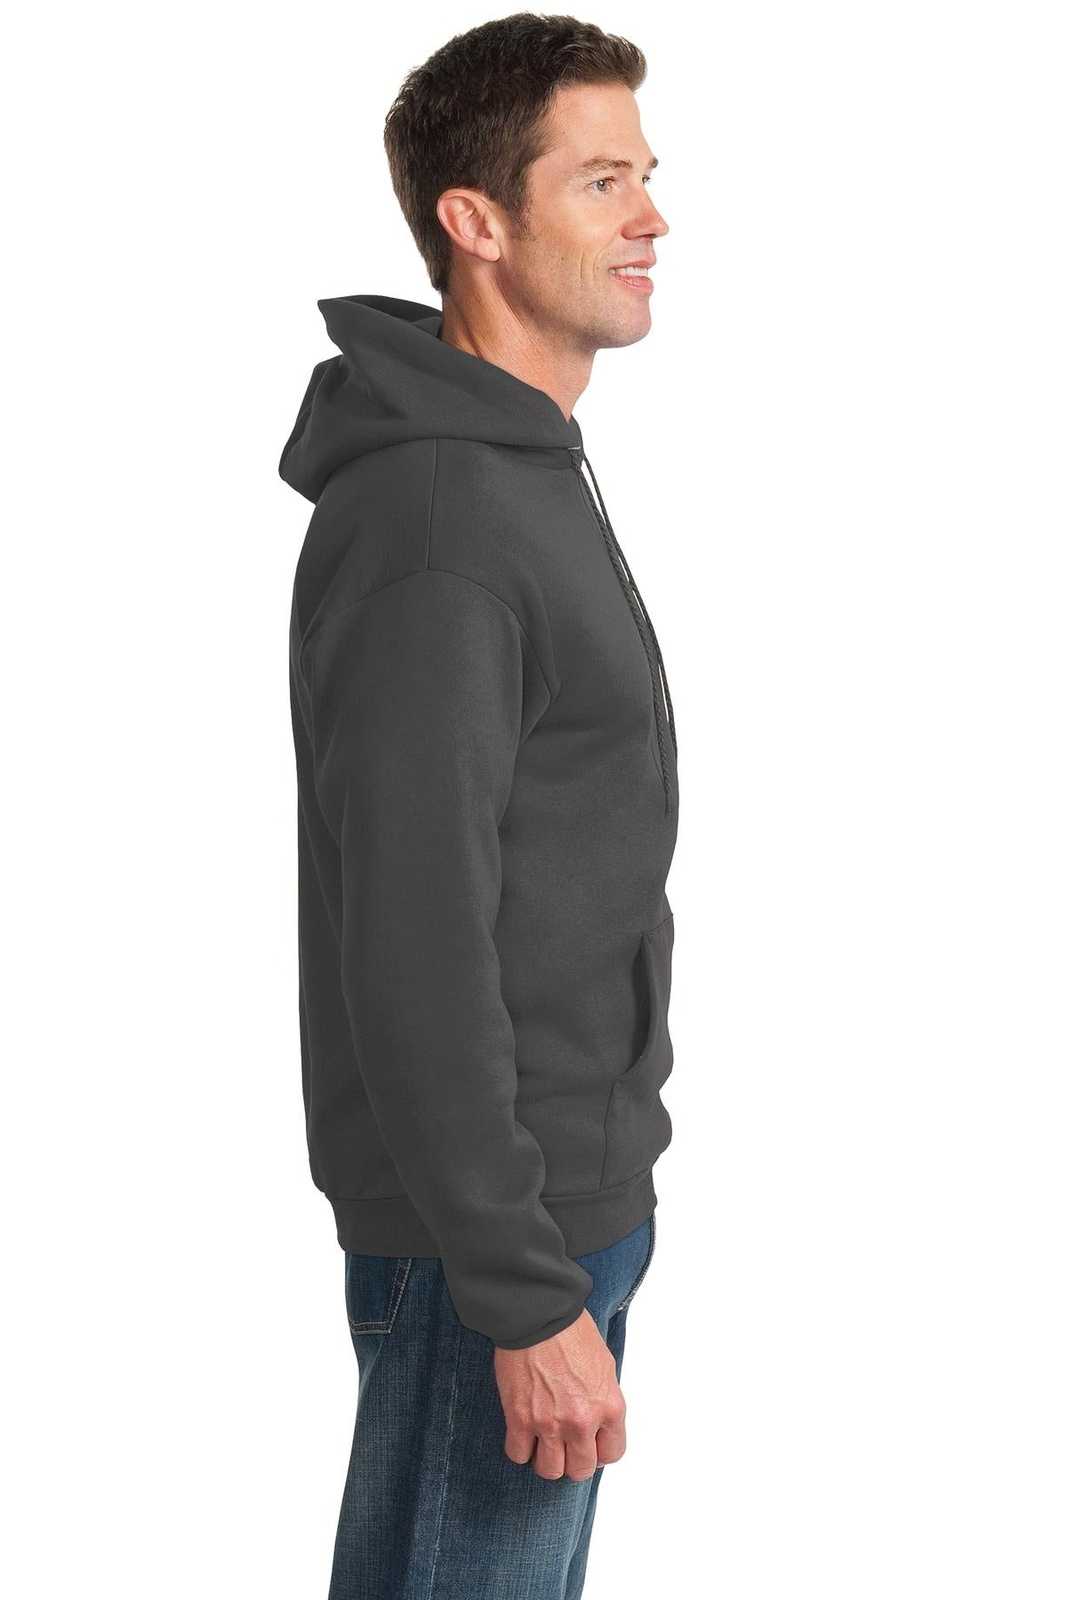 Port & Company Essential Fleece Pullover Hooded Sweatshirt, Product